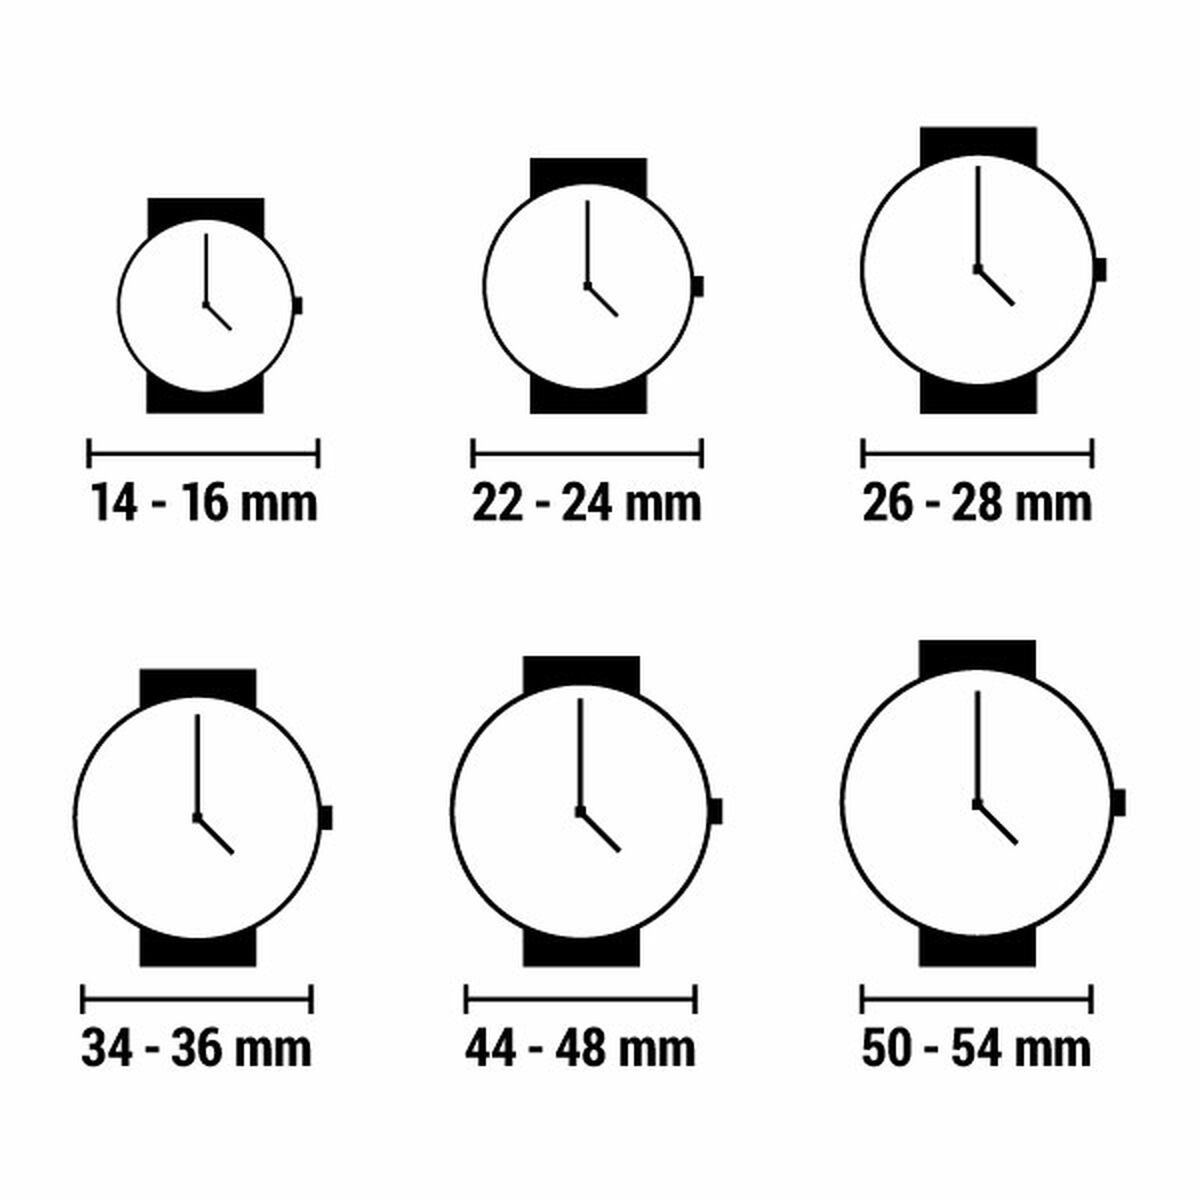 Horloge Dames Versace VEKB004-22 (Ø 40 mm)